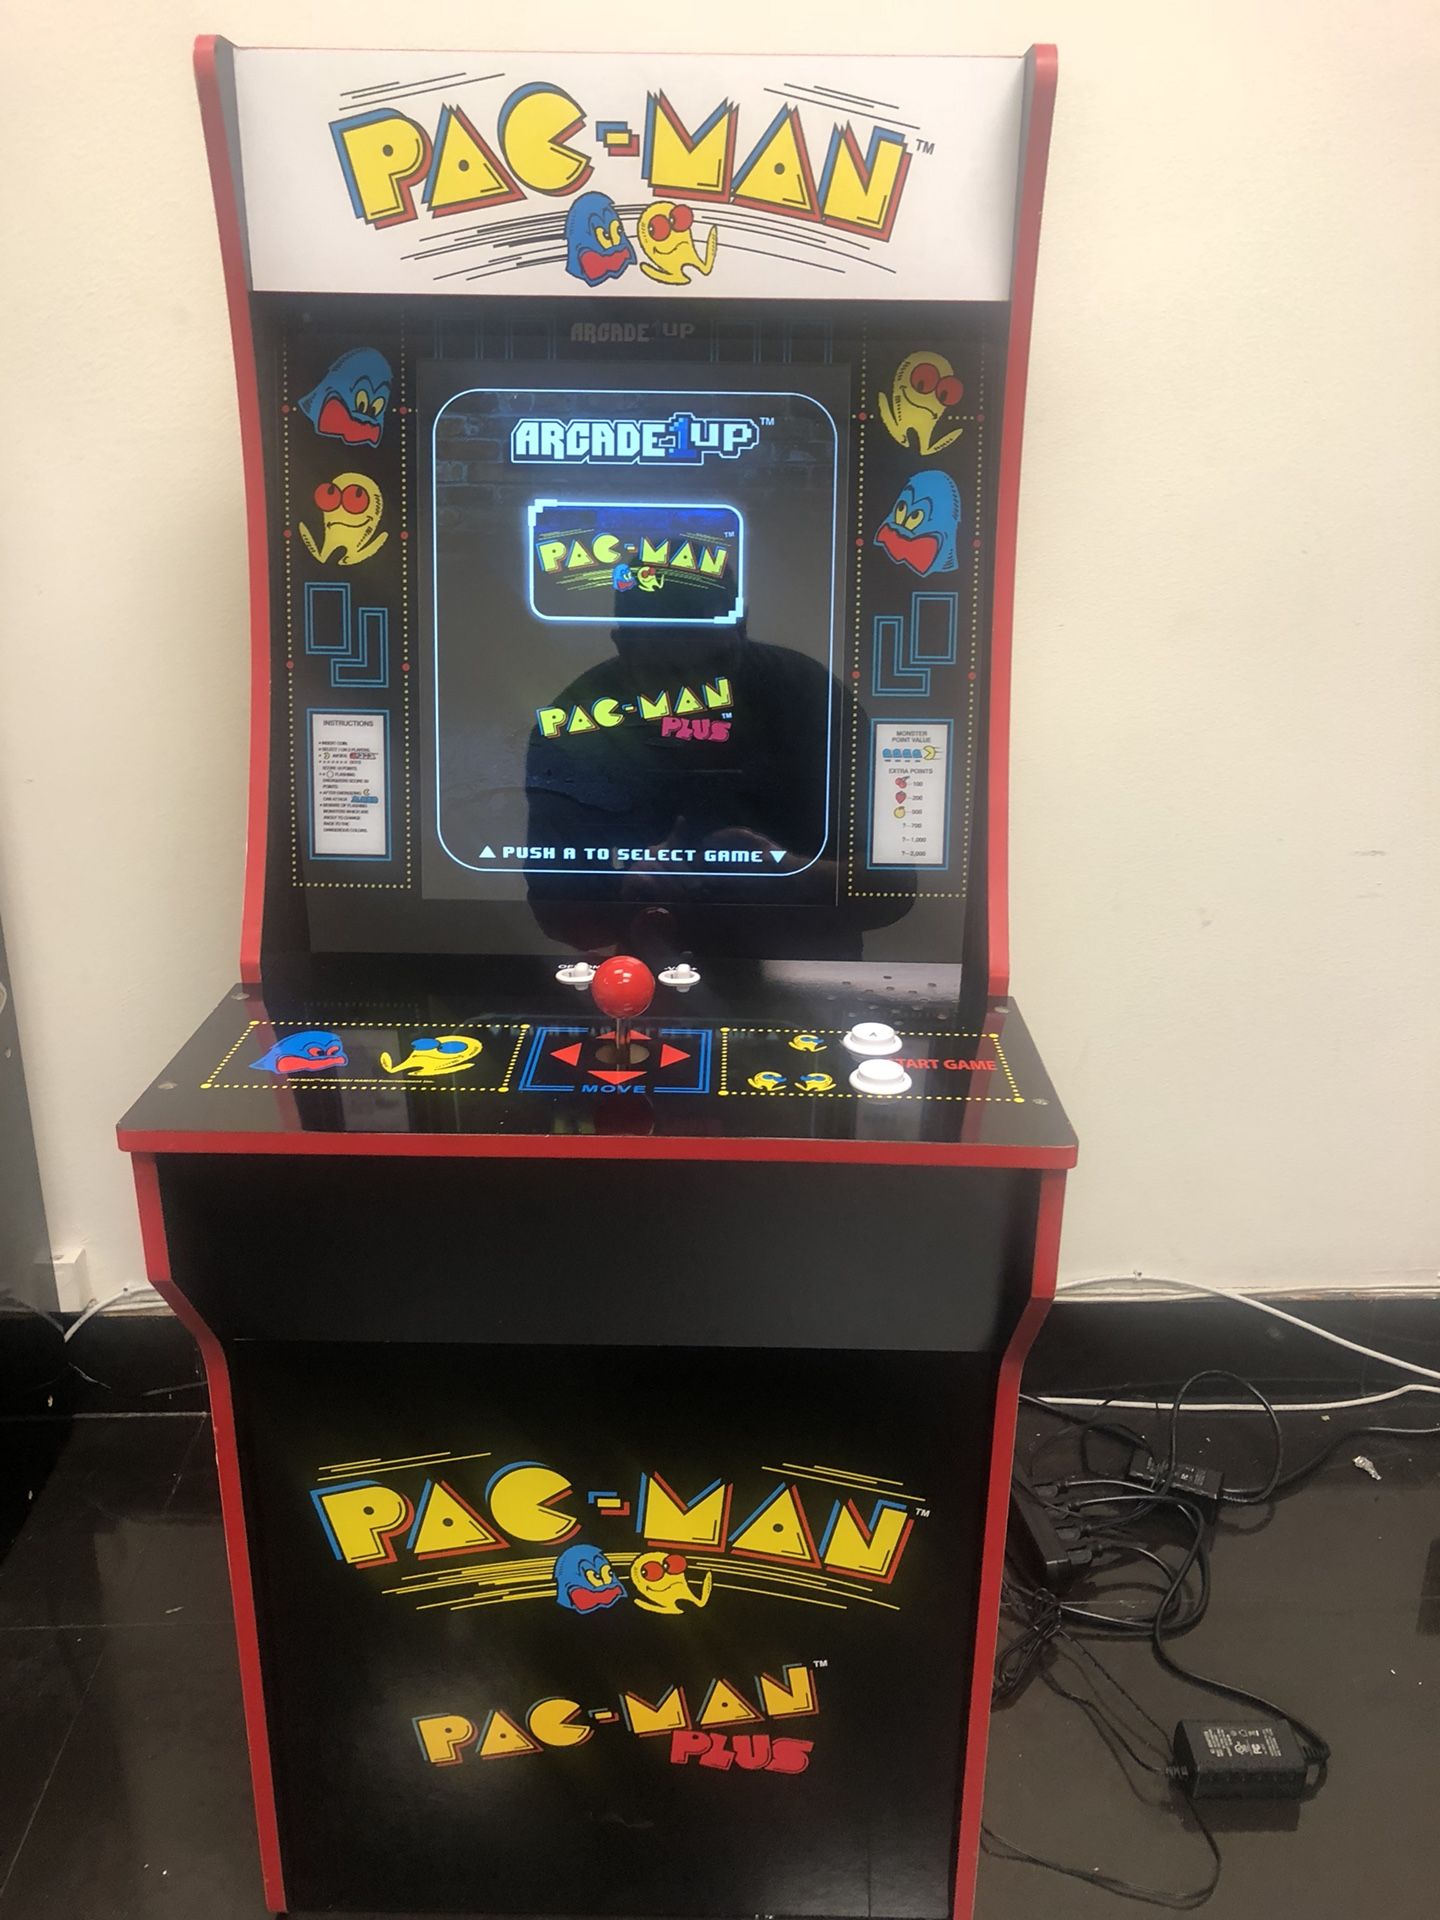 Pac-Man Pacman arcade machine arcade box video game console arcade cabinet two games